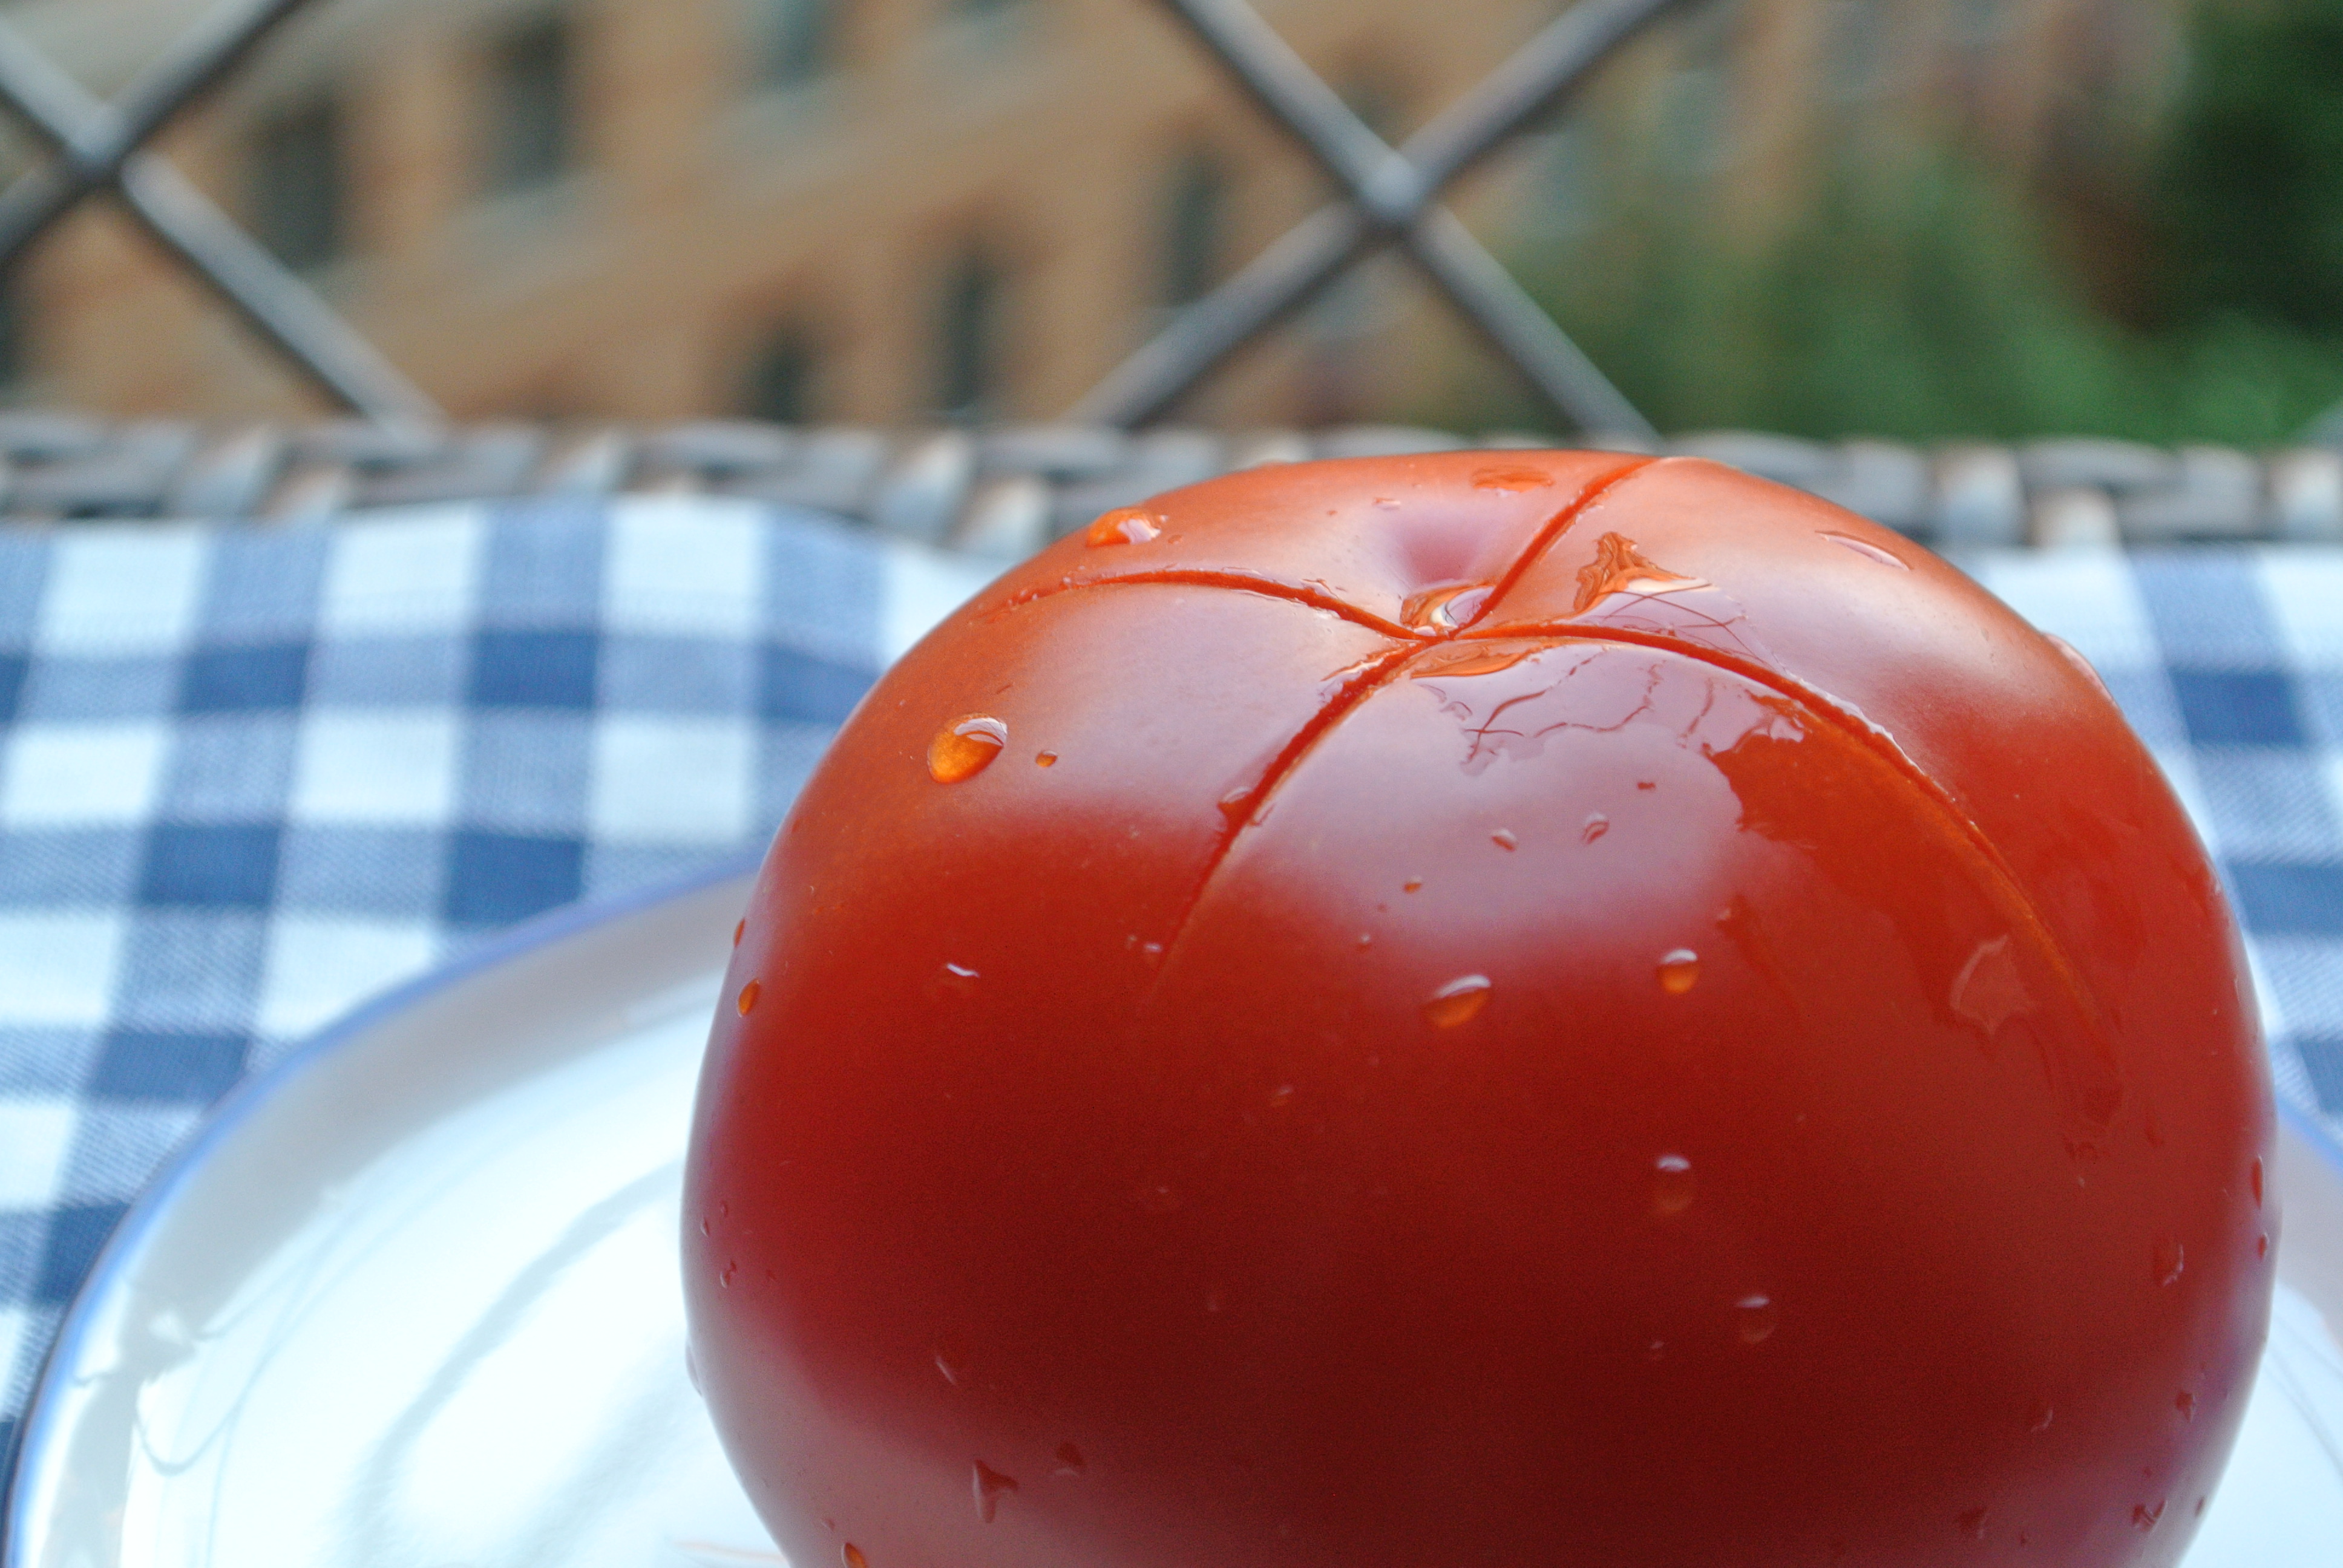 Tomato with X